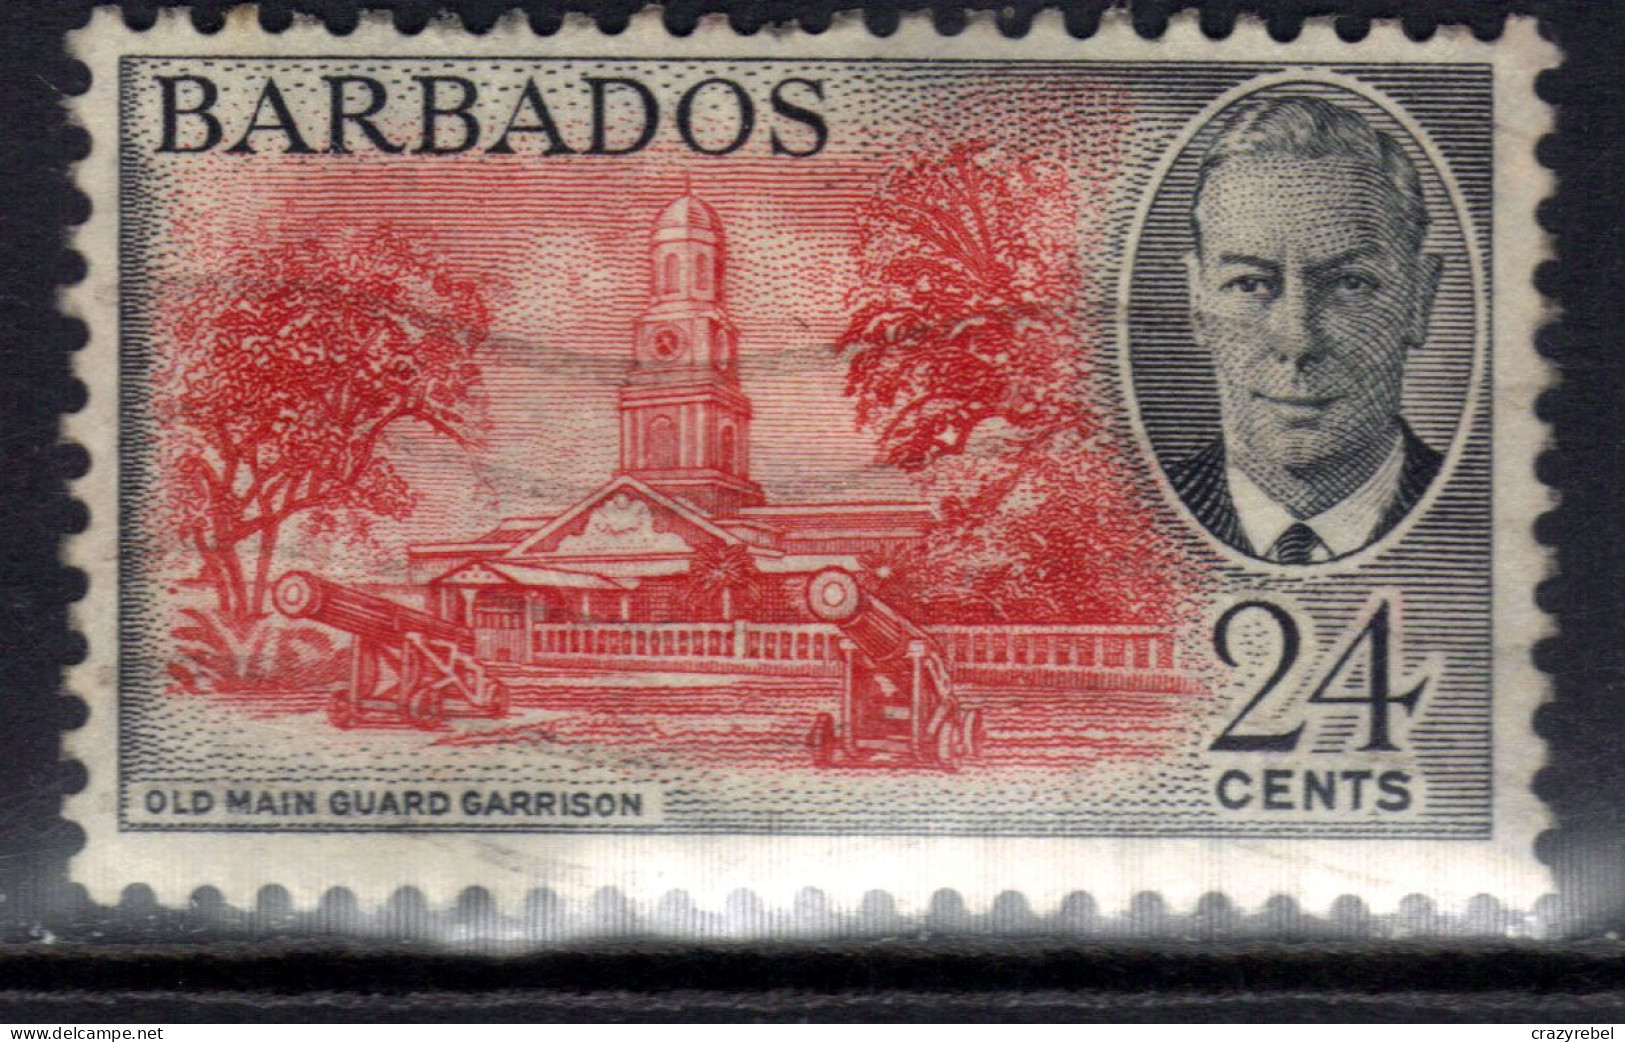 Barbados 1950 KGV1 24ct Guard Garrison Used SG 278 ( J813 ) - Barbados (...-1966)